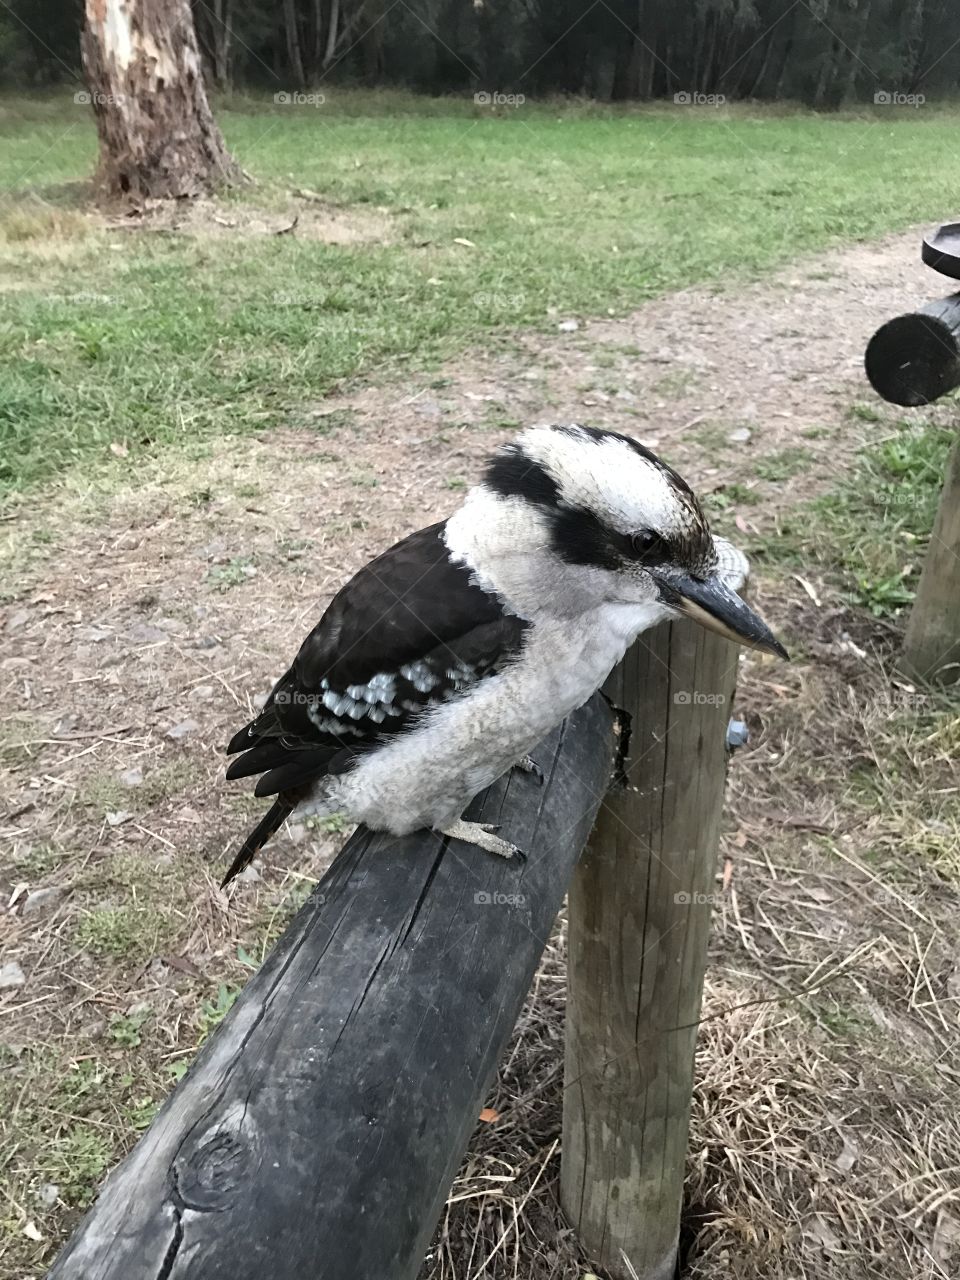 Australian Kookaburra waiting for a meal